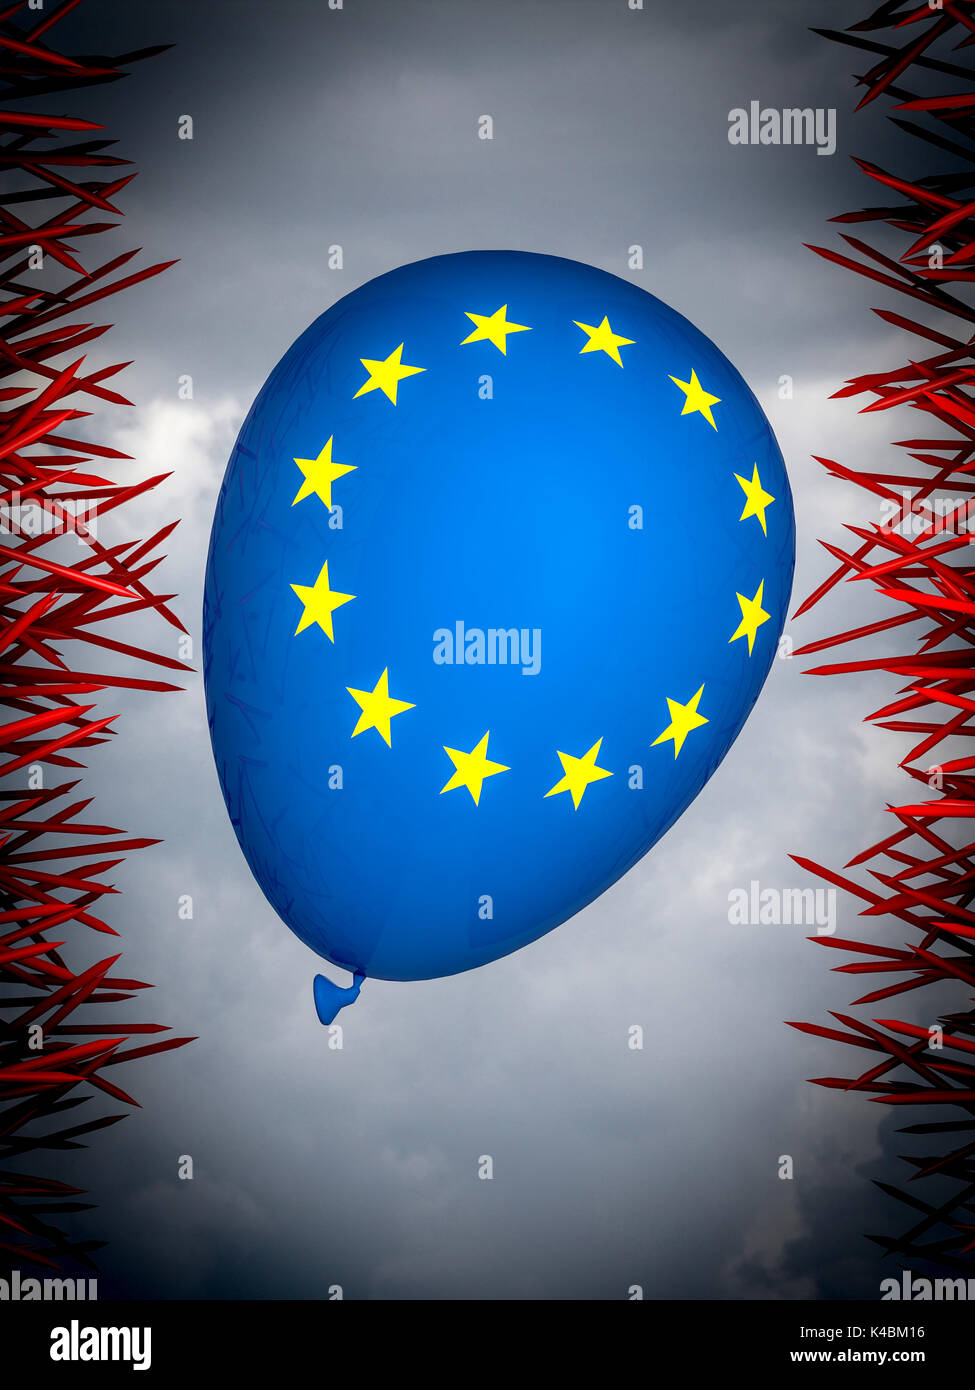 Ballon mit Europa Fahne und Rote nägel 3D Rendering image Stockfoto